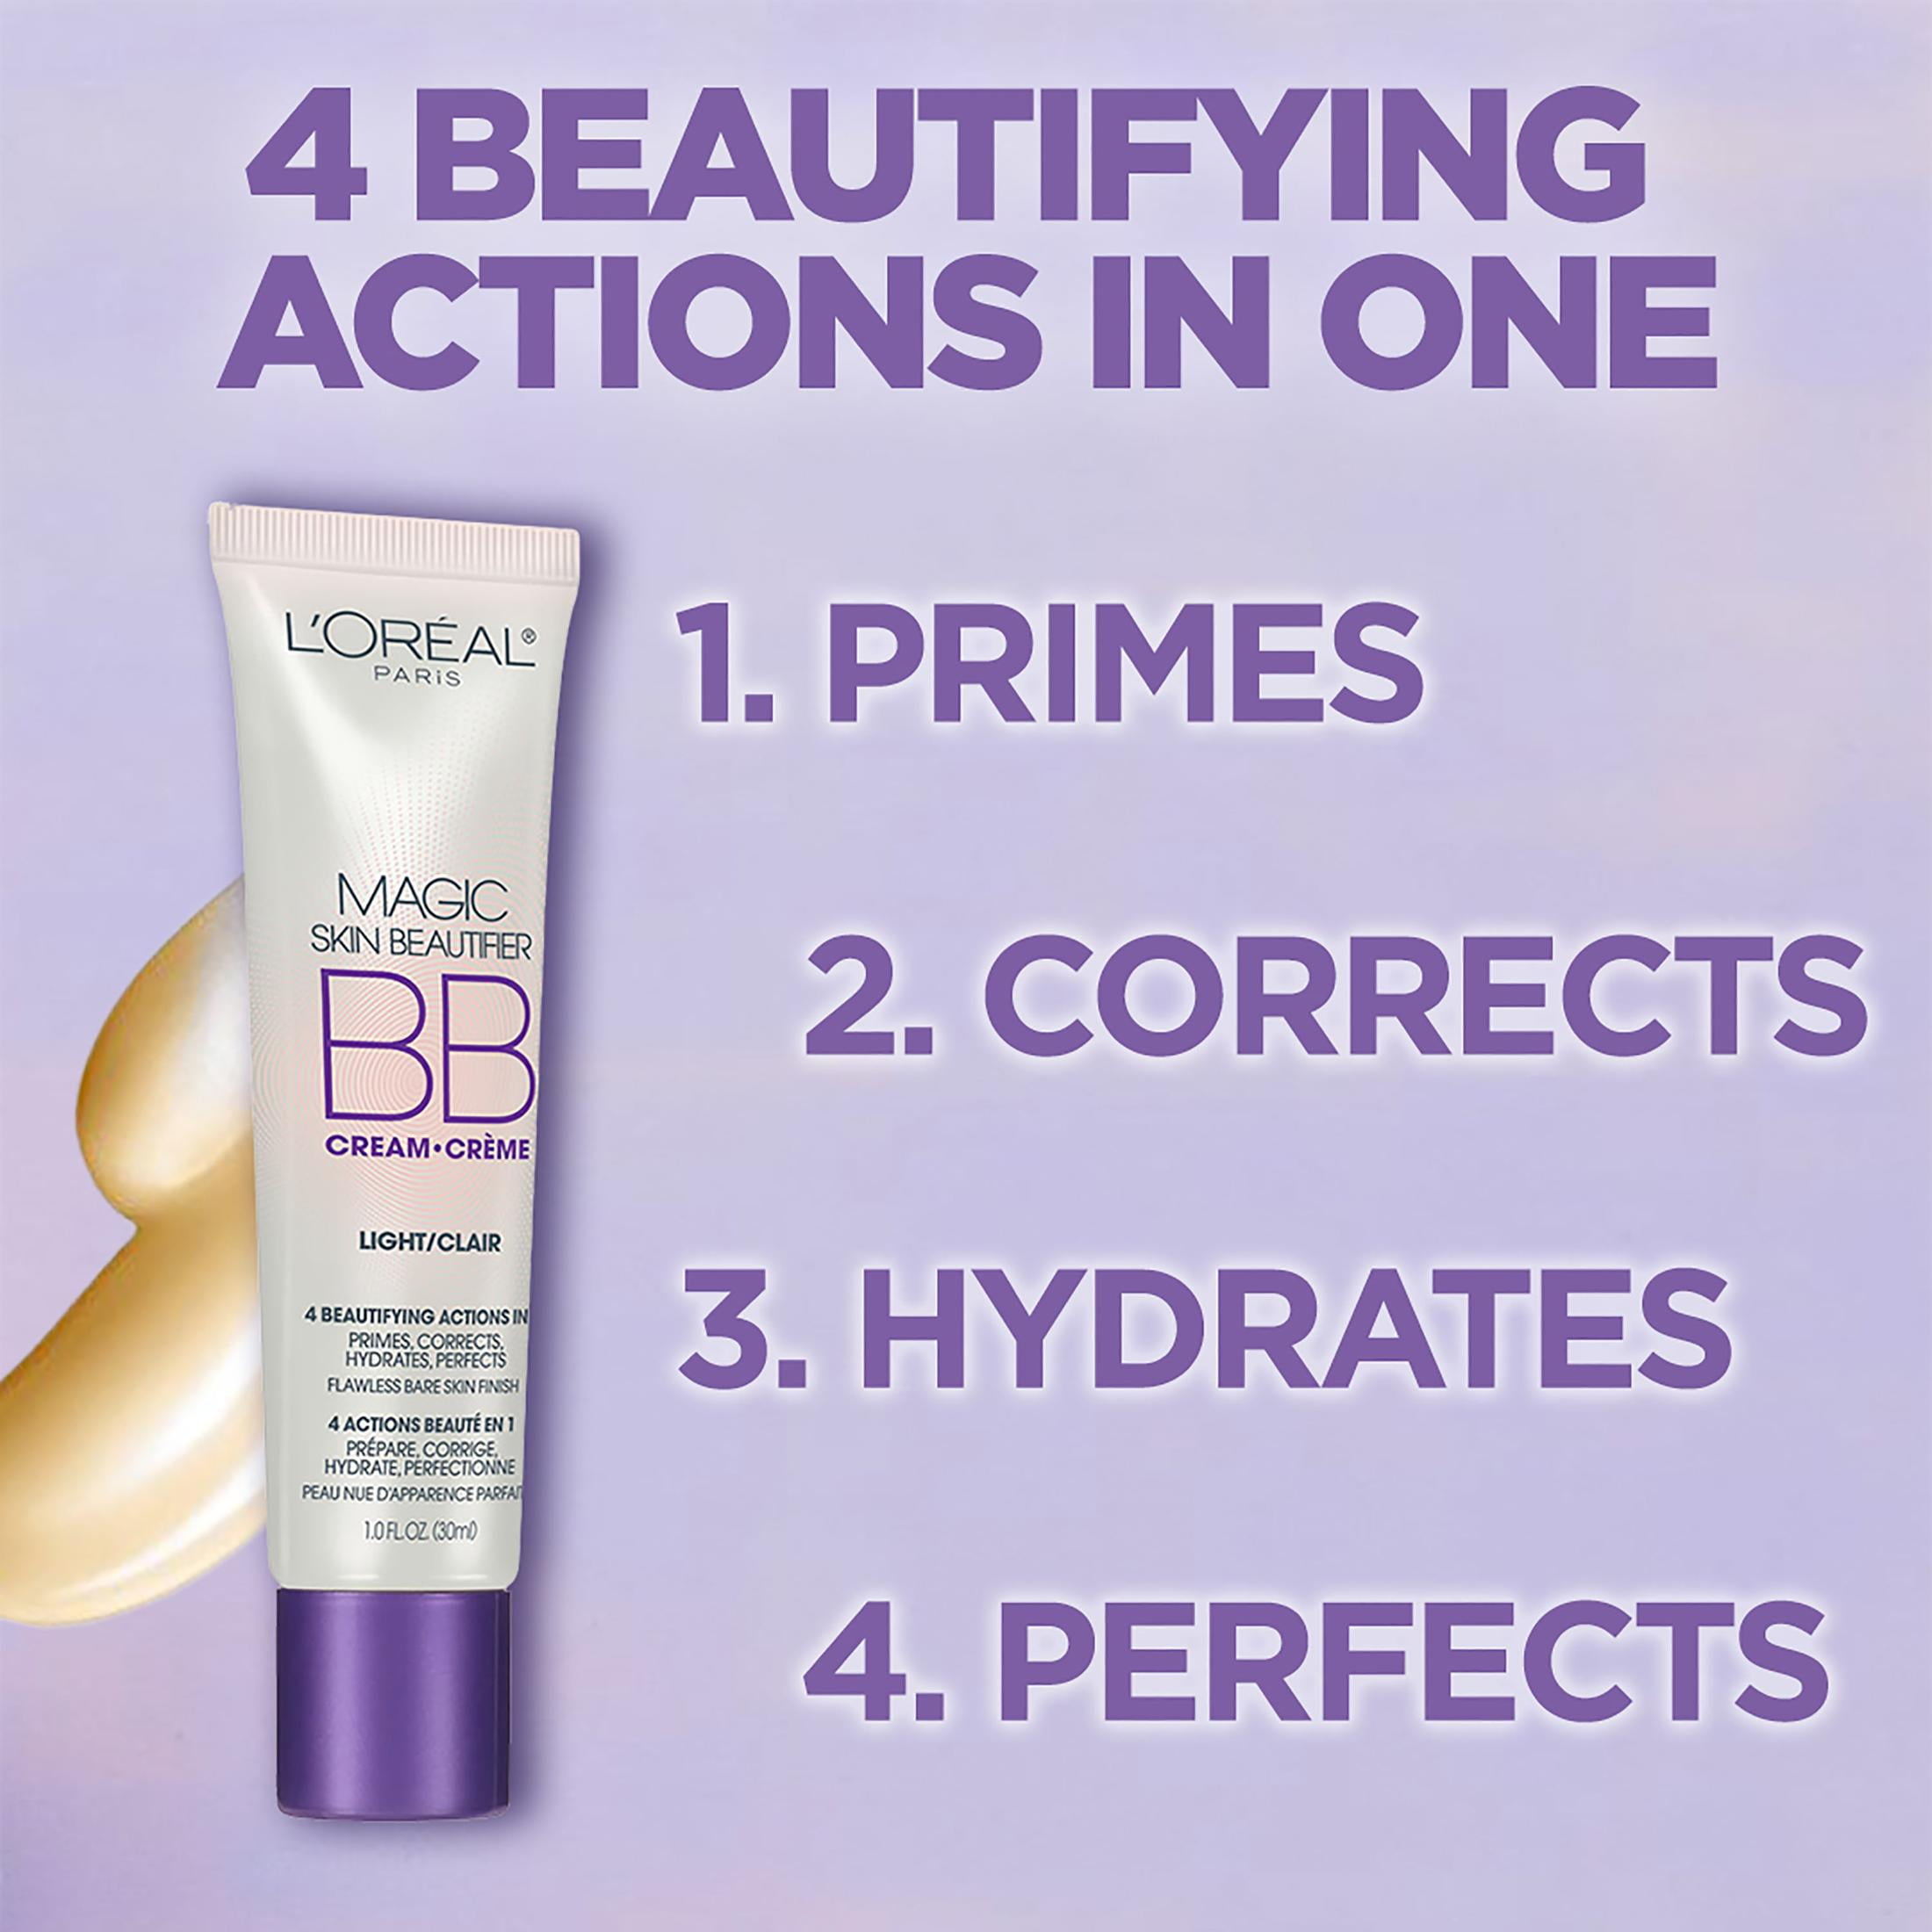 Magic Skin Beautifier BB Cream Anti-Fatigue - L'Oréal